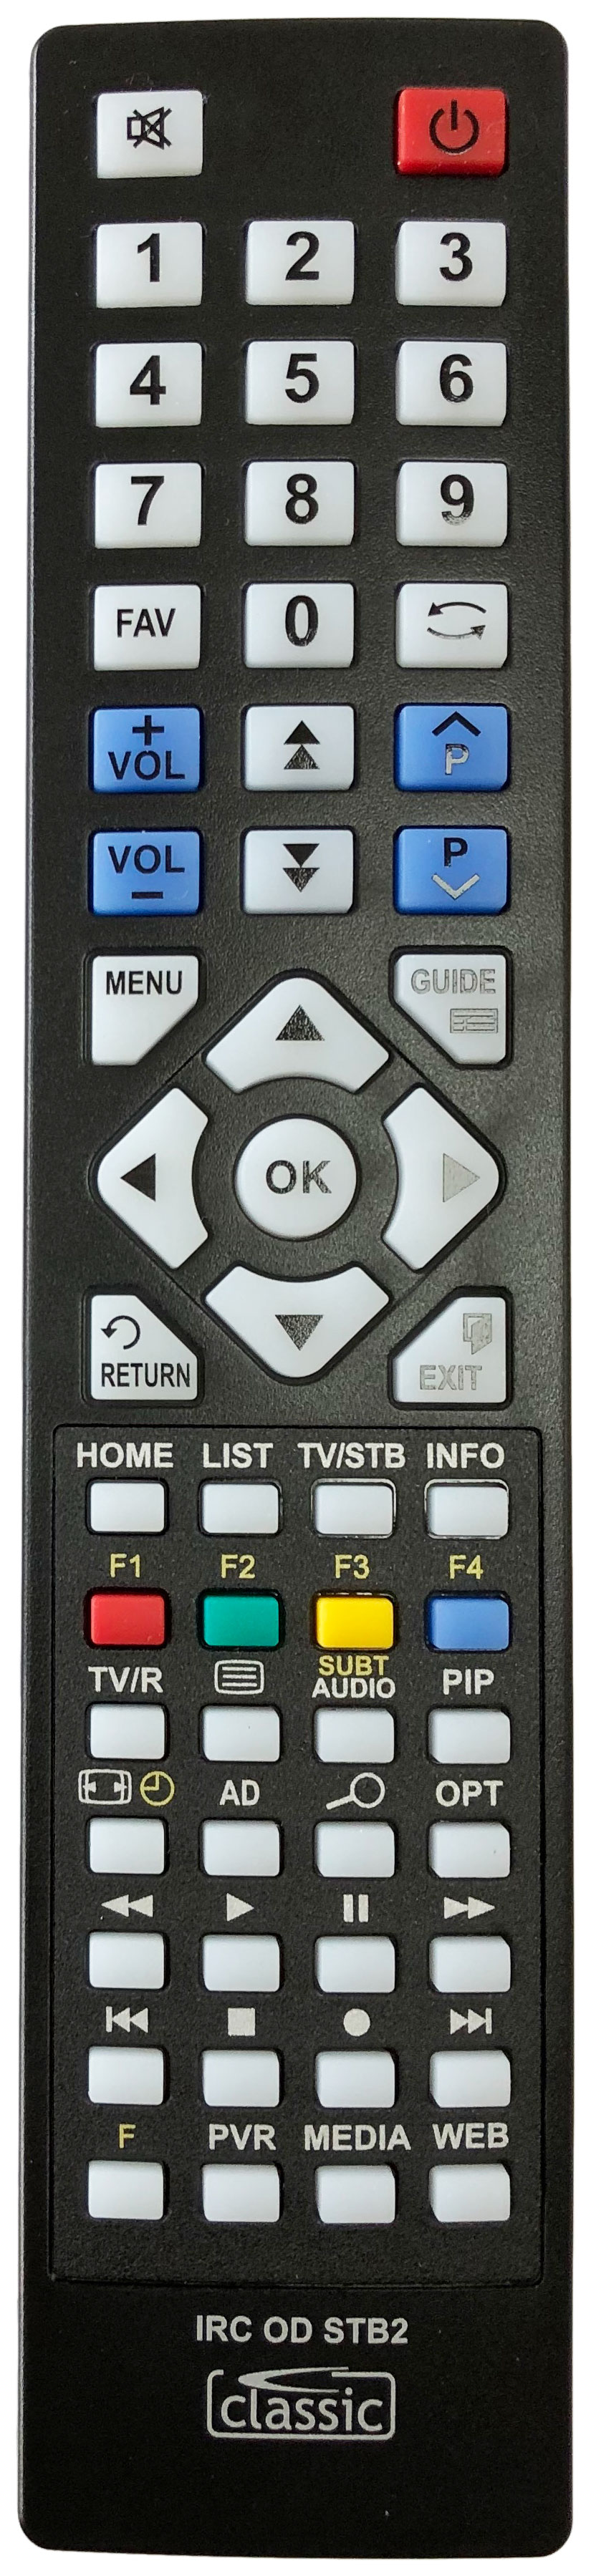 TRIAX 3139 238 20911 Remote Control Alternative